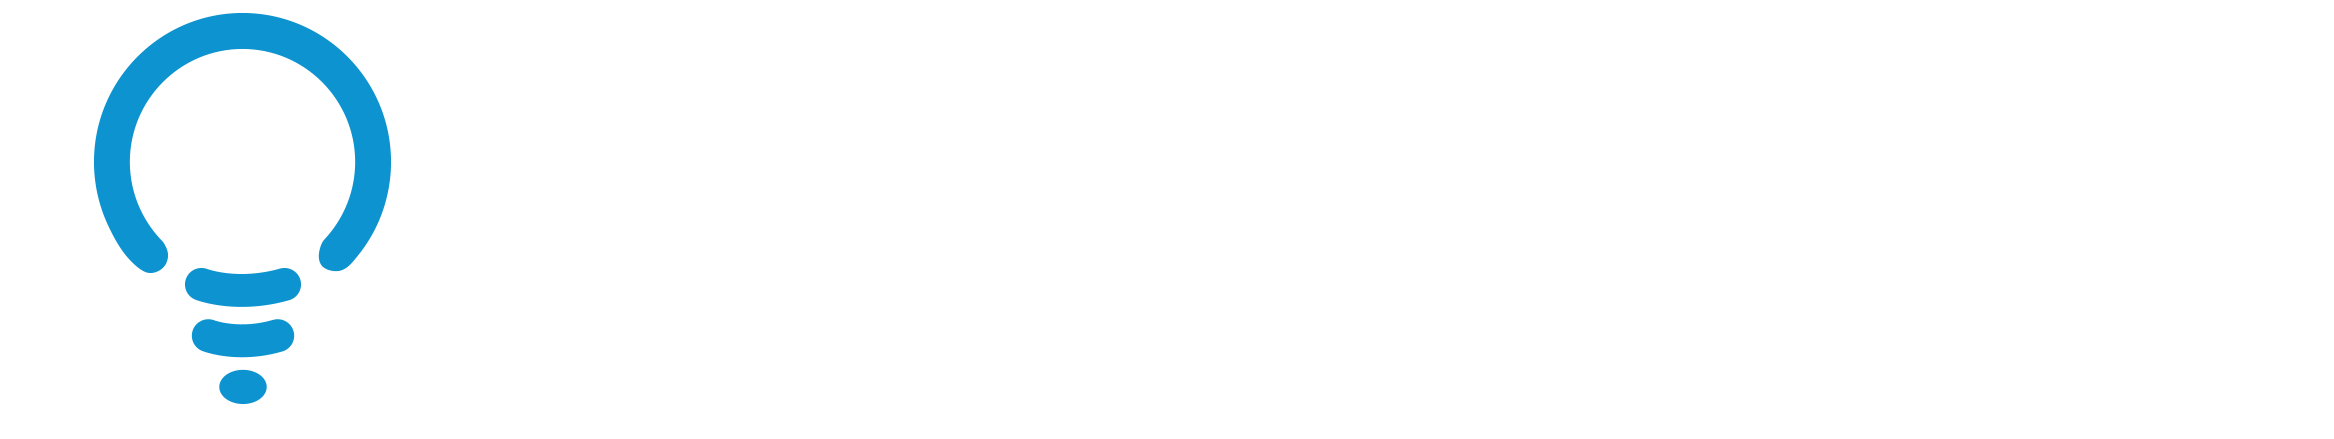 Adverteos | Smart Marketing